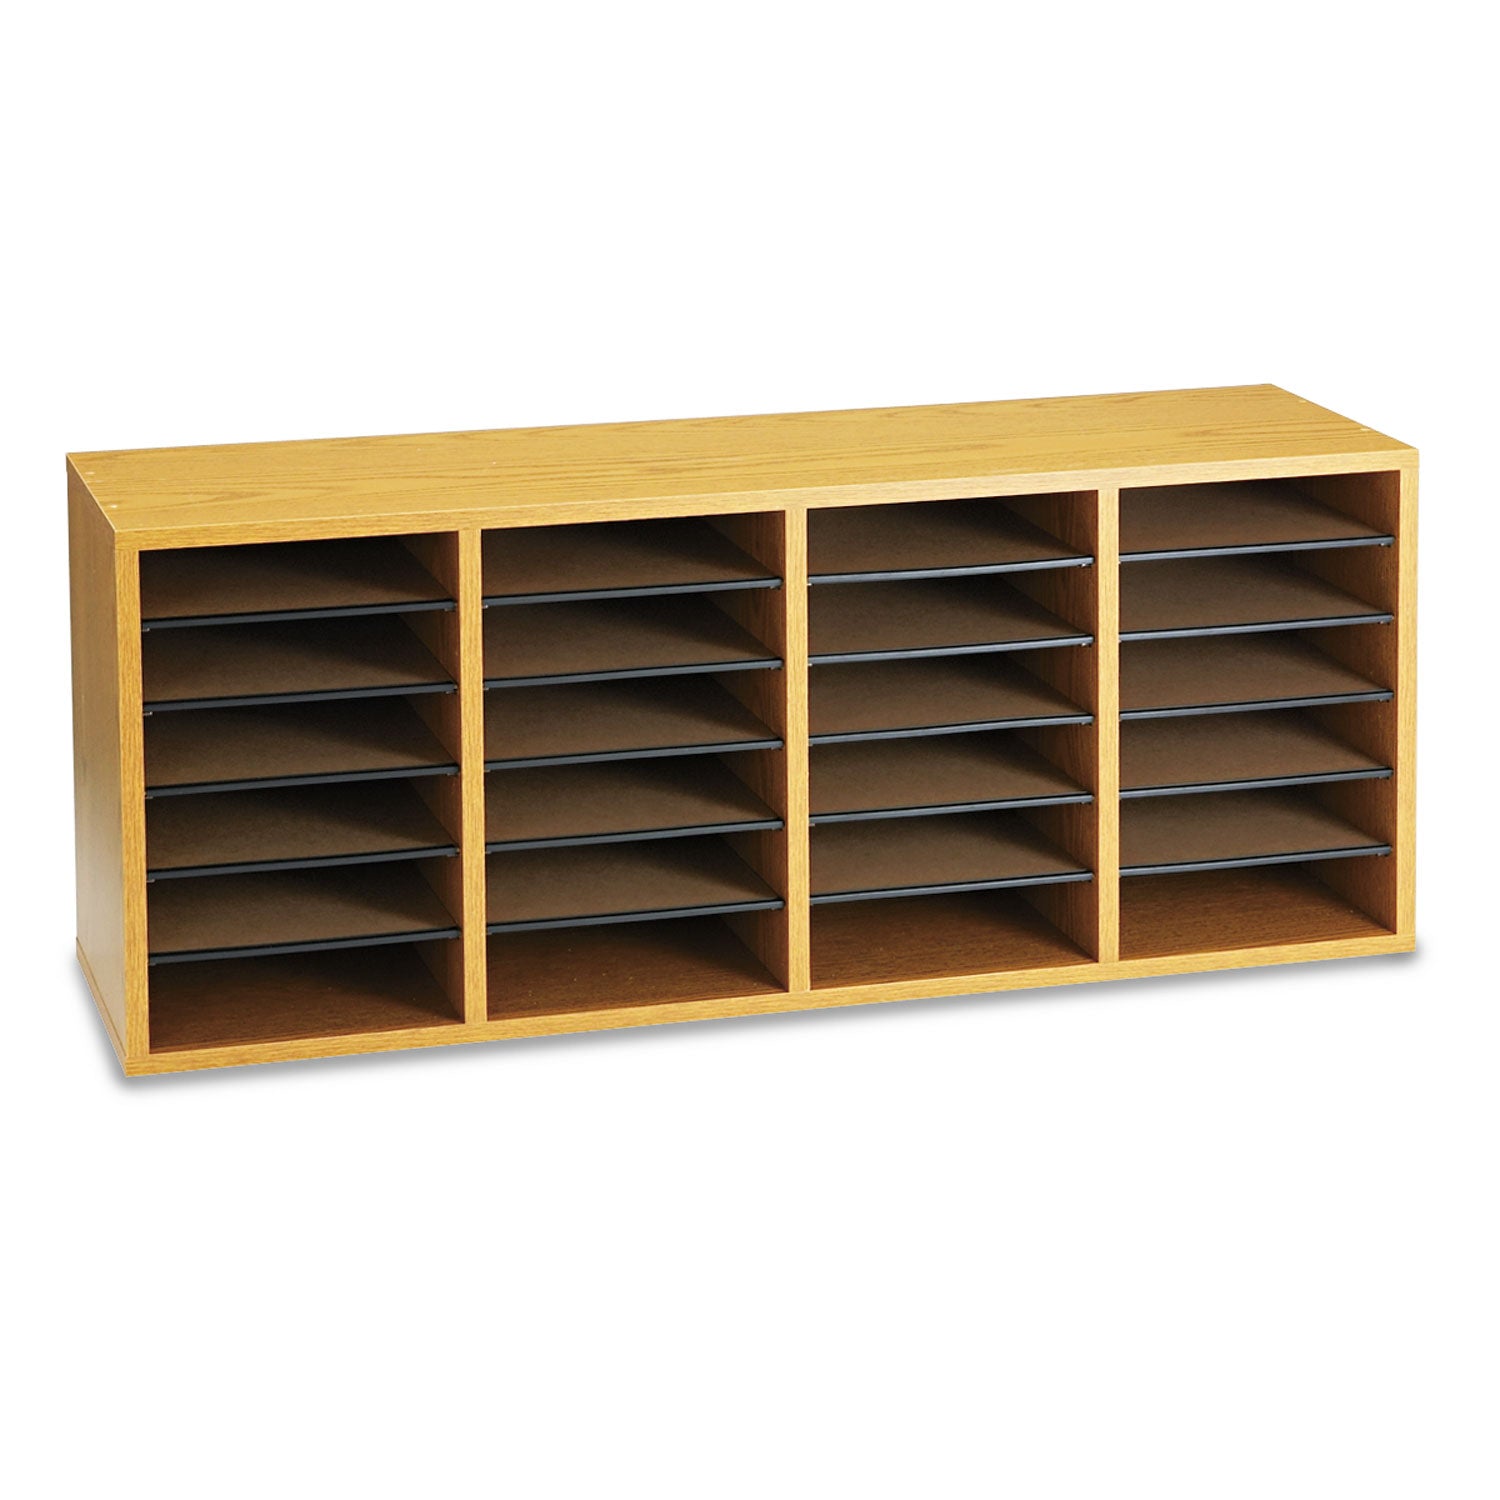 Wood/Laminate Sorter, 24 Compartments, 39.25 x 11.75 x 16.25, Medium Oak - 